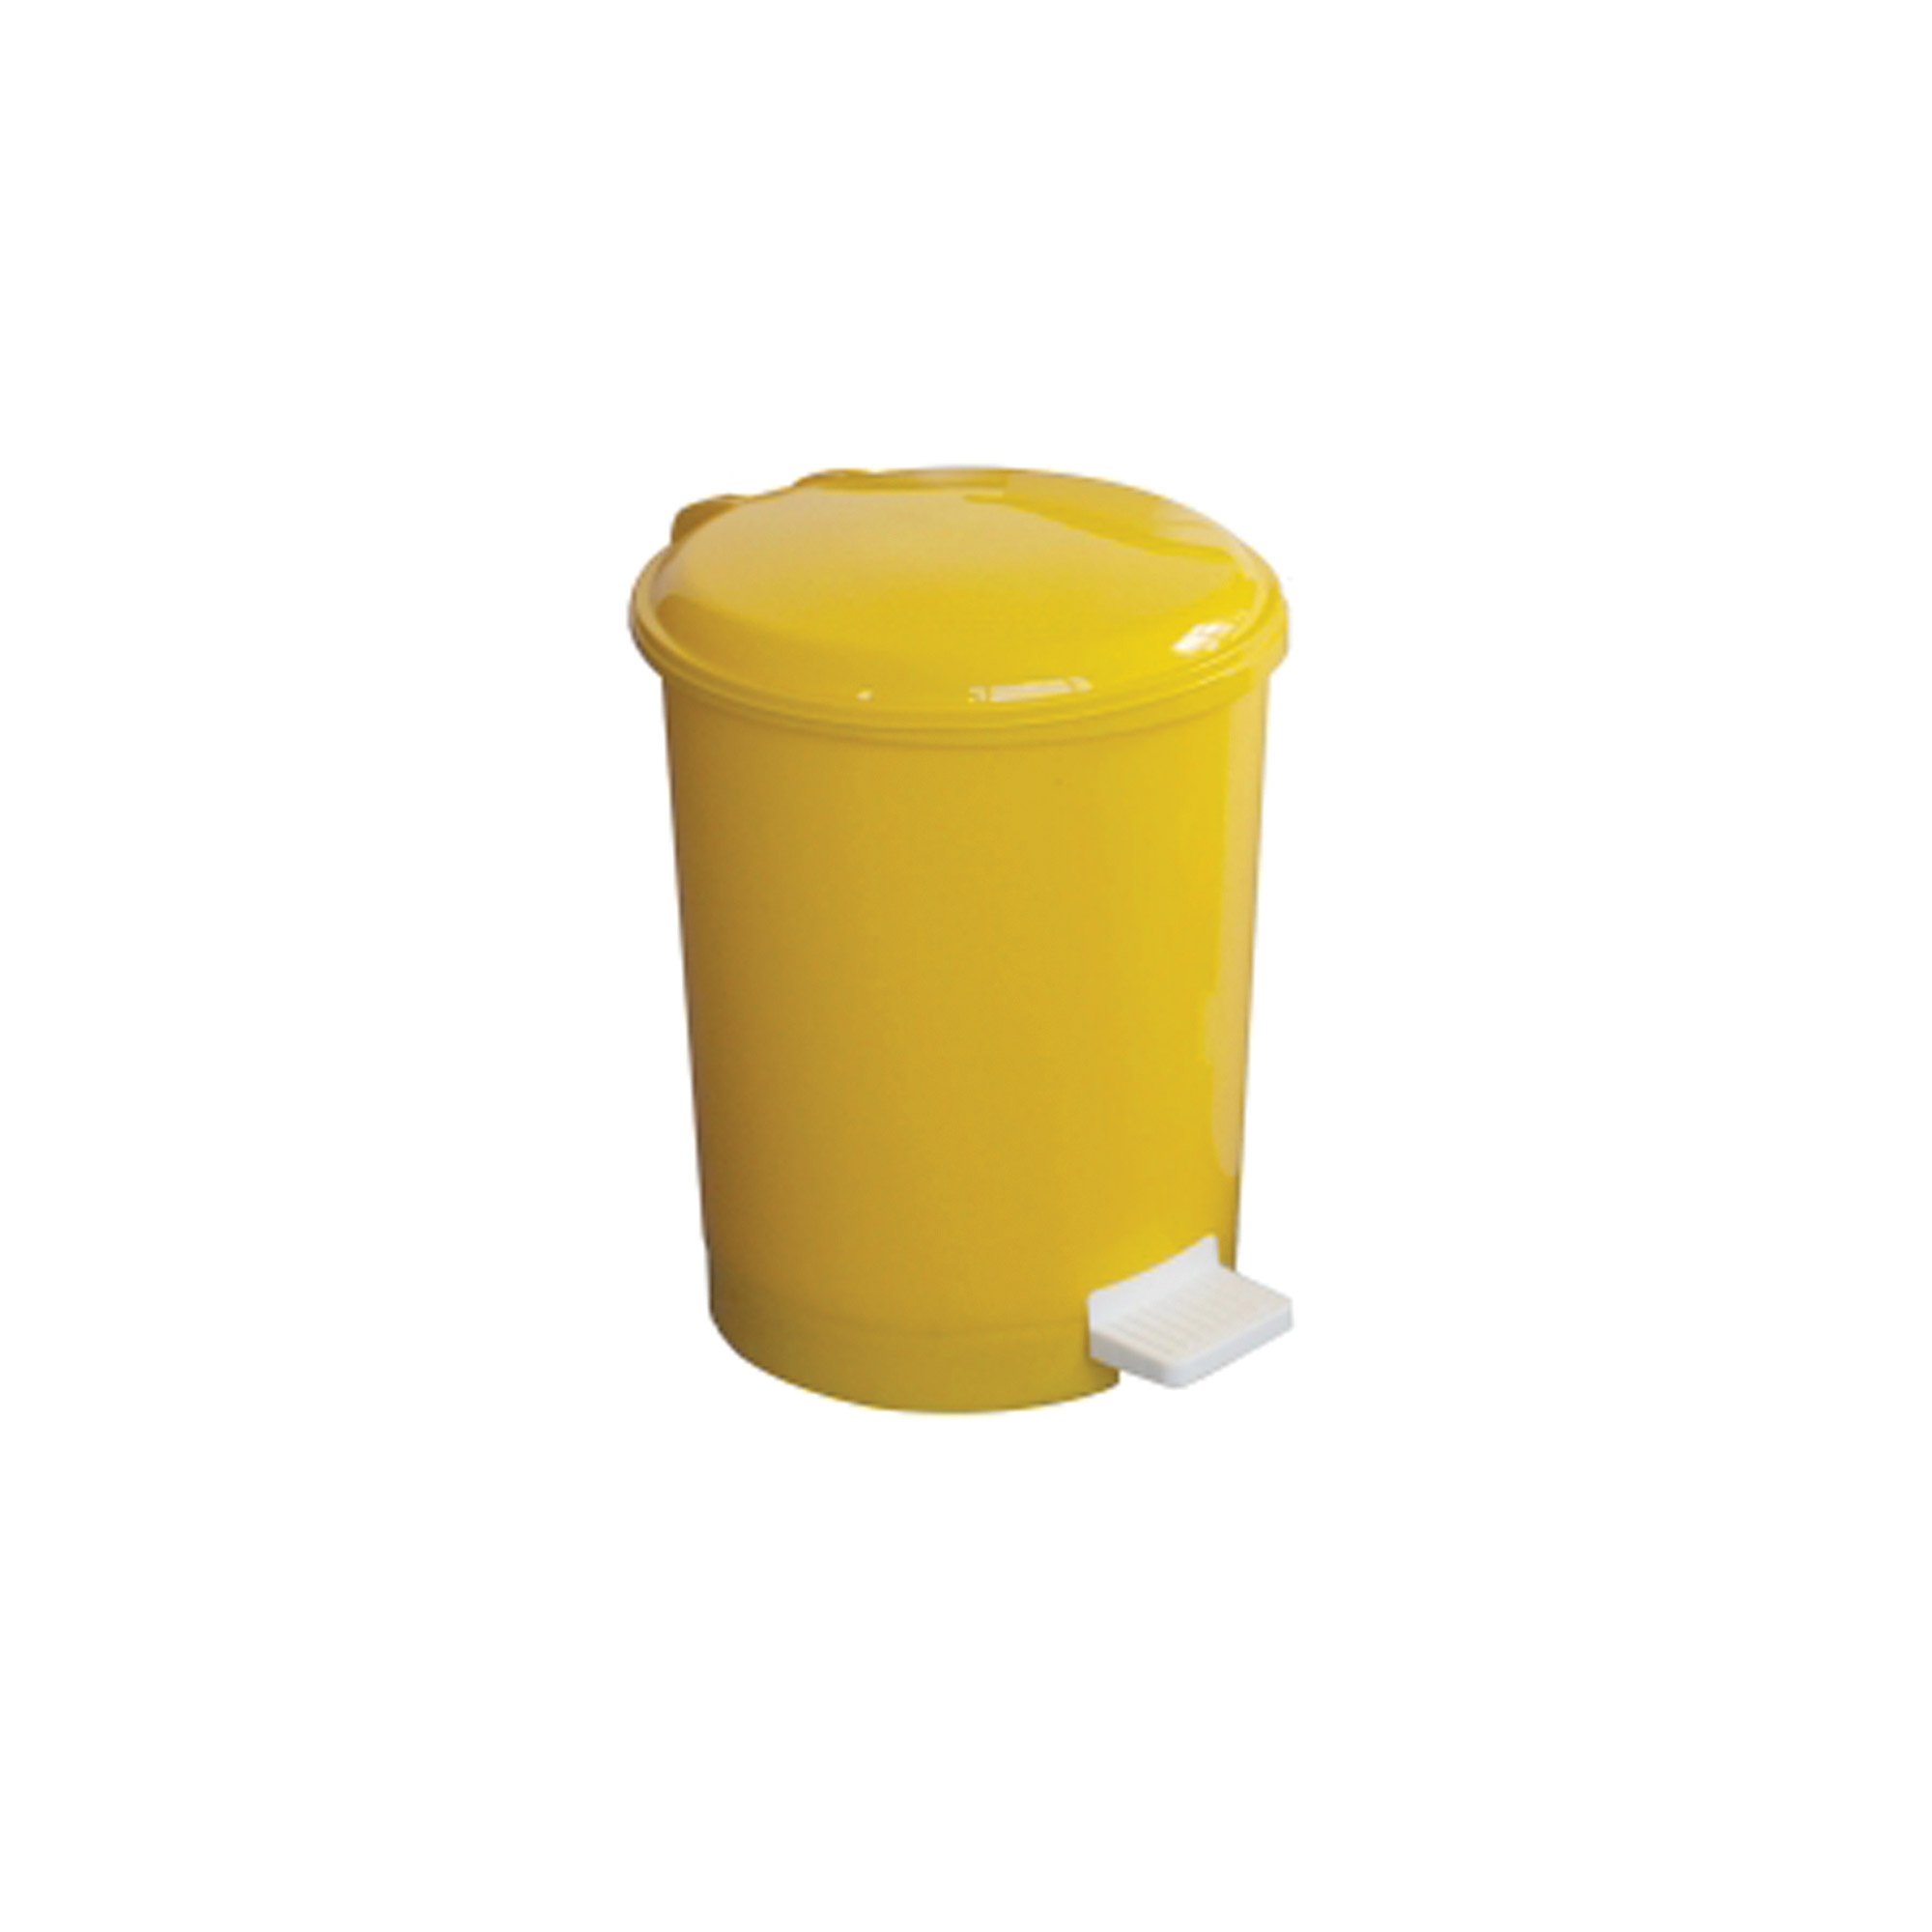 12L Yellow Clinical Waste Plastic Pedal Bin - EACH